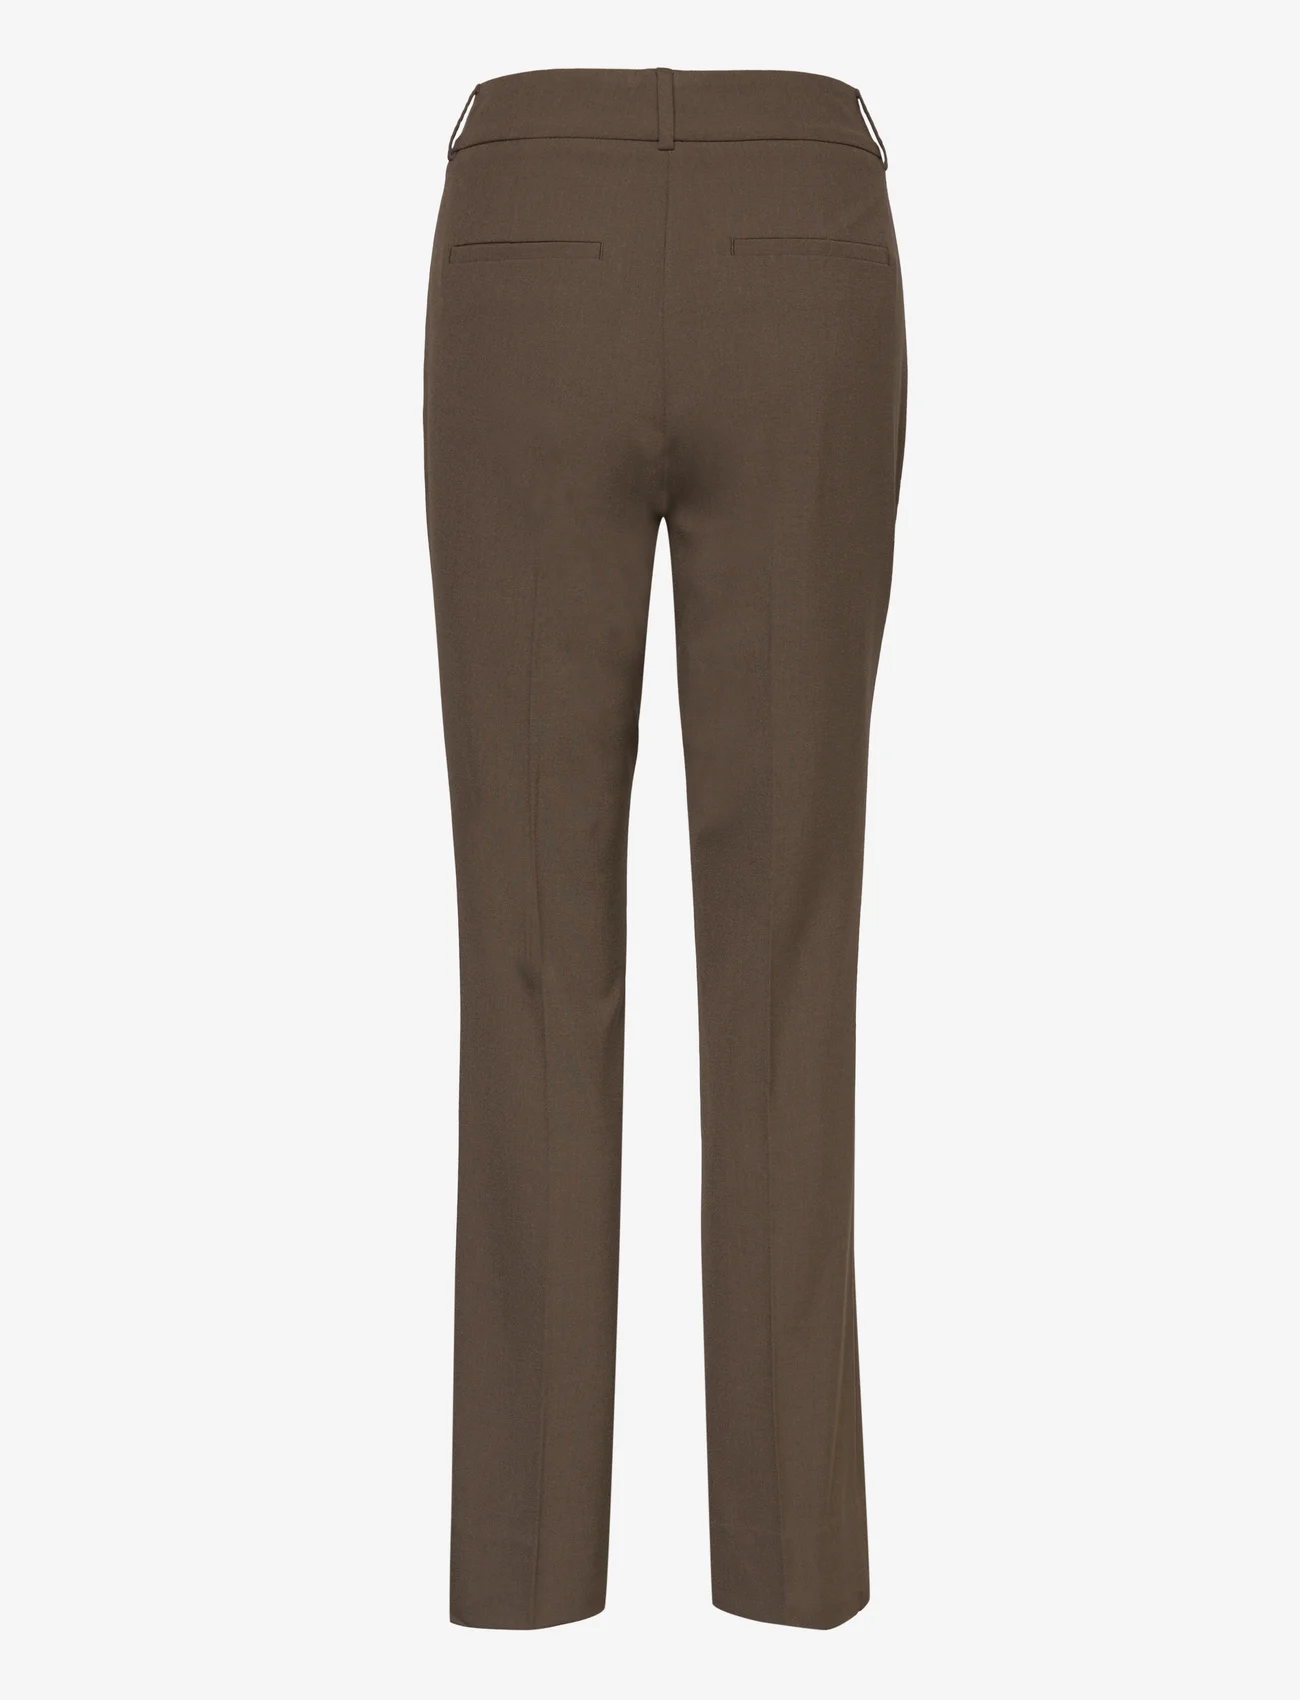 FIVEUNITS - Clara - trousers - grey brown melange - 1